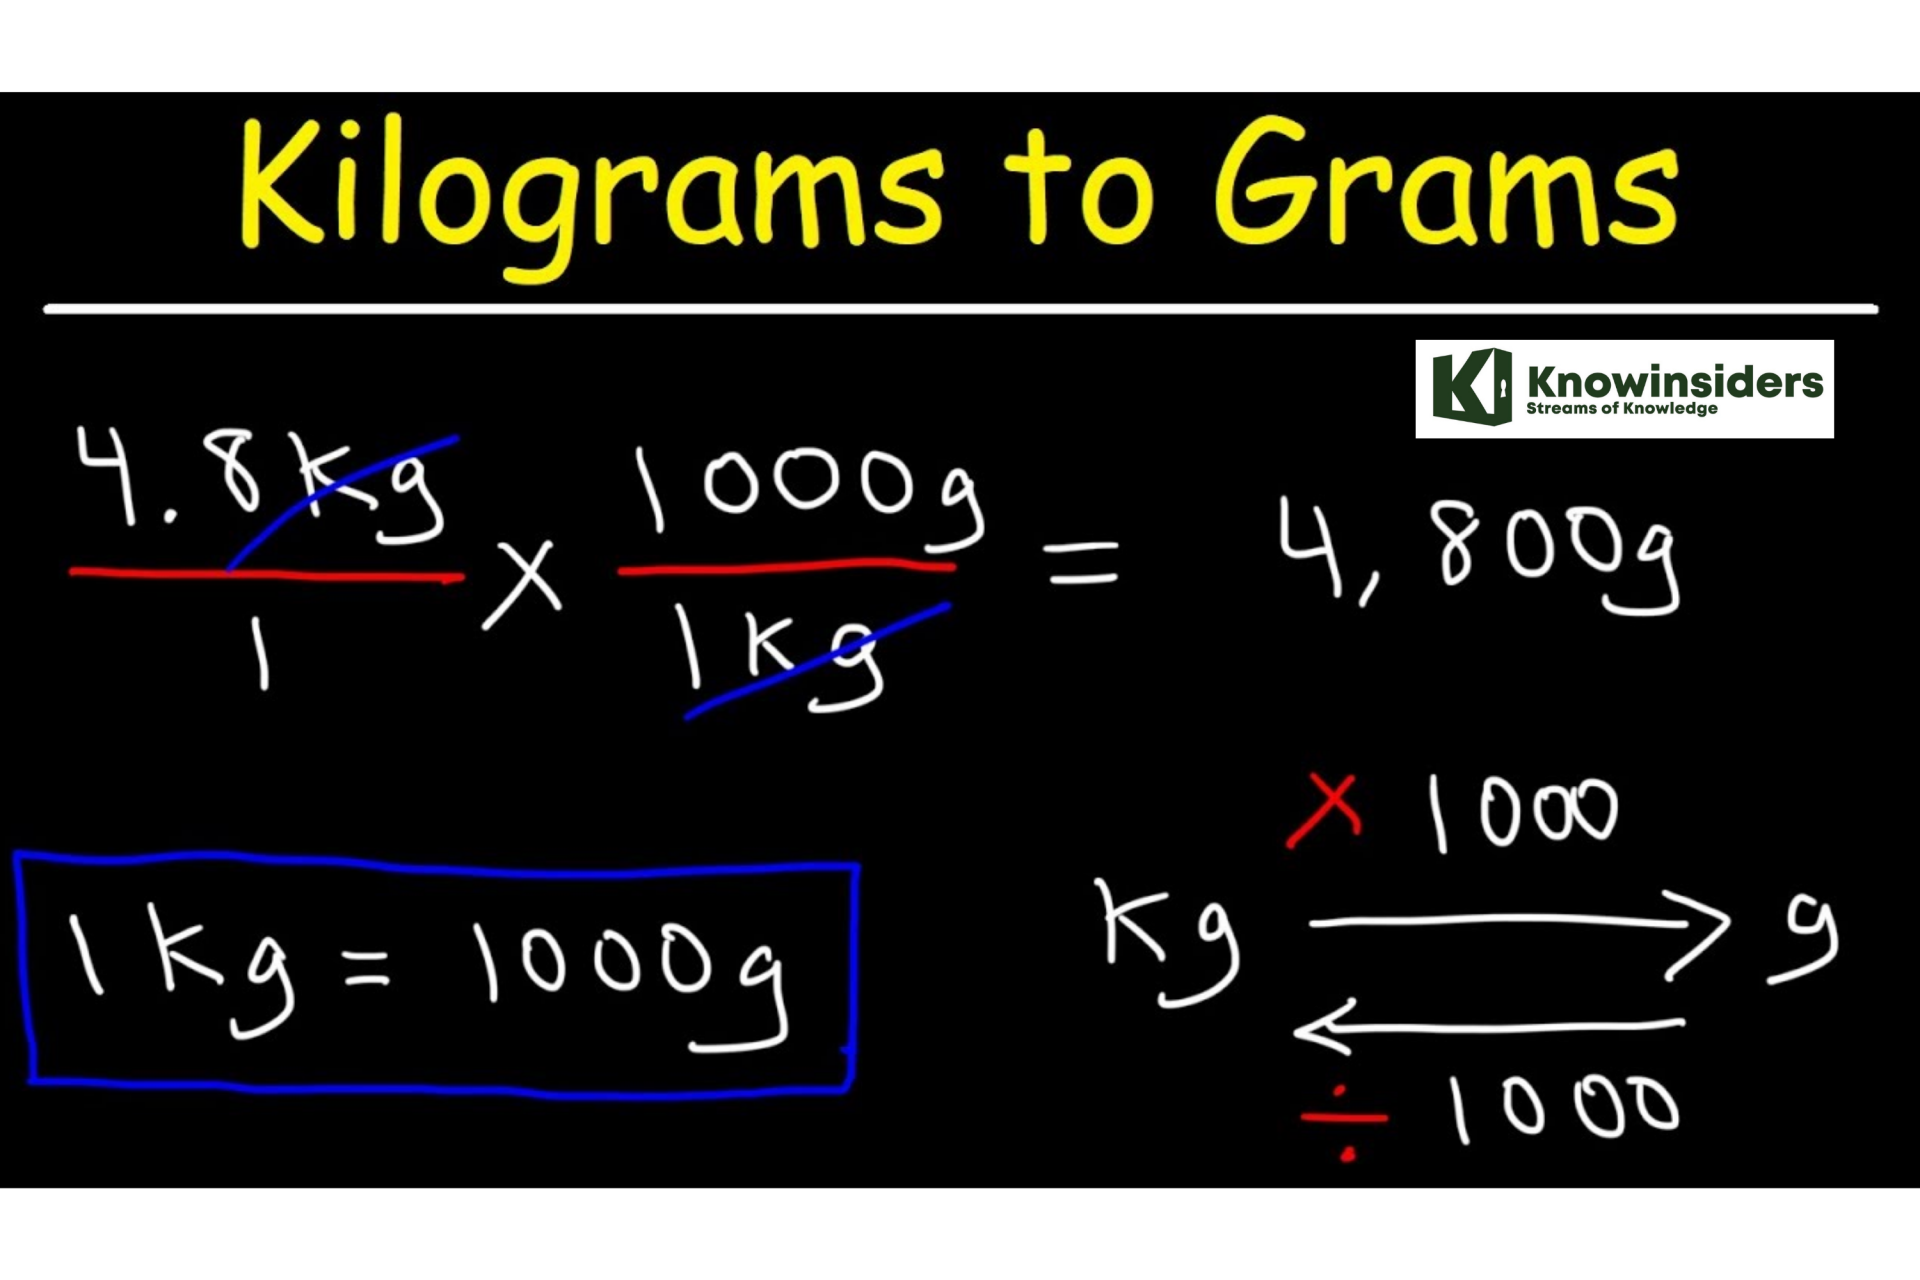 How to Convert Kilograms to Grams